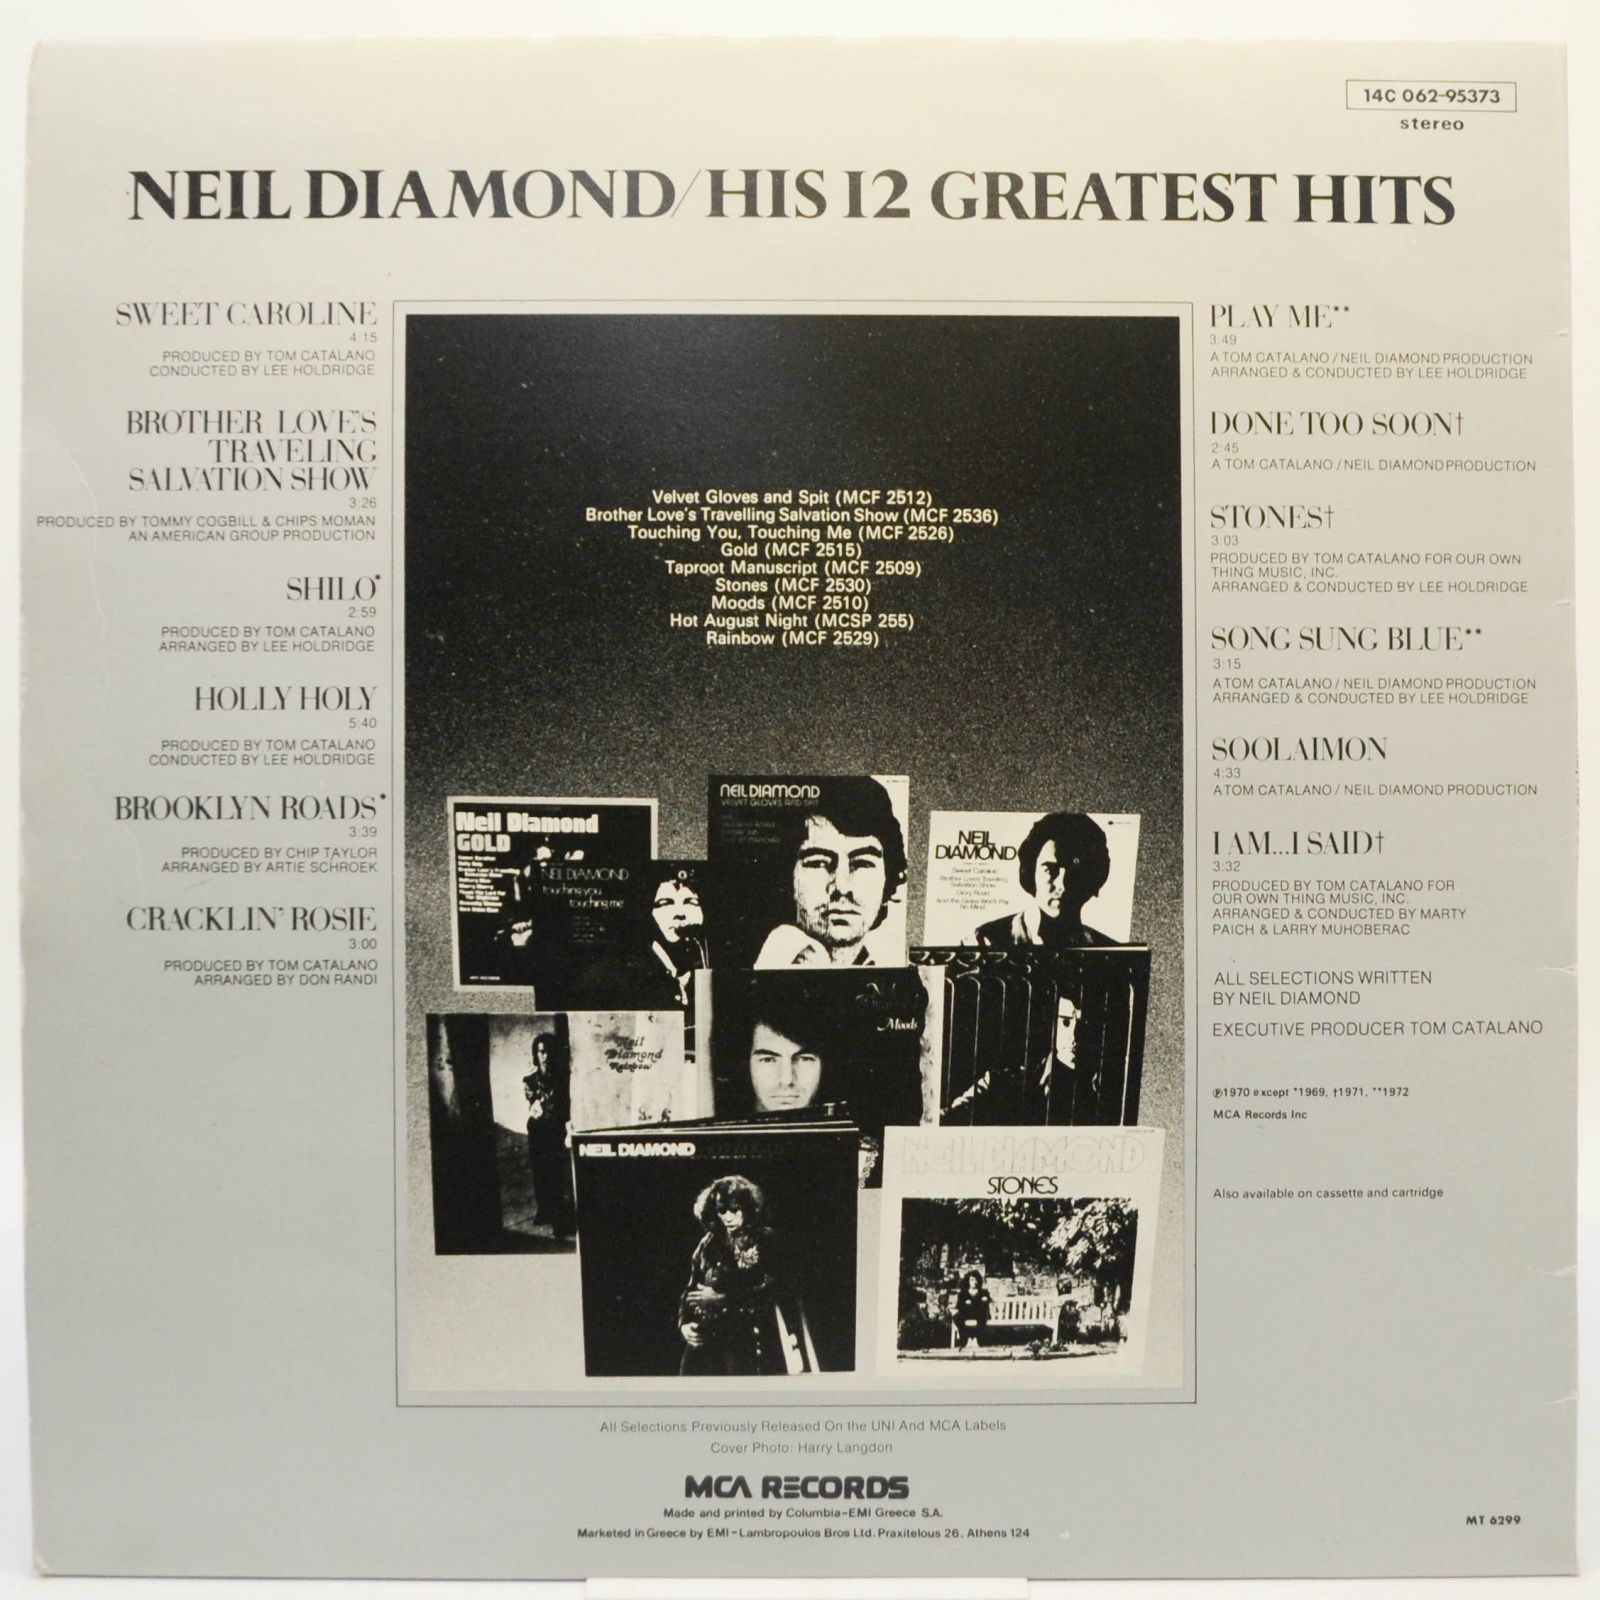 Neil Diamond — His 12 Greatest Hits, 1974